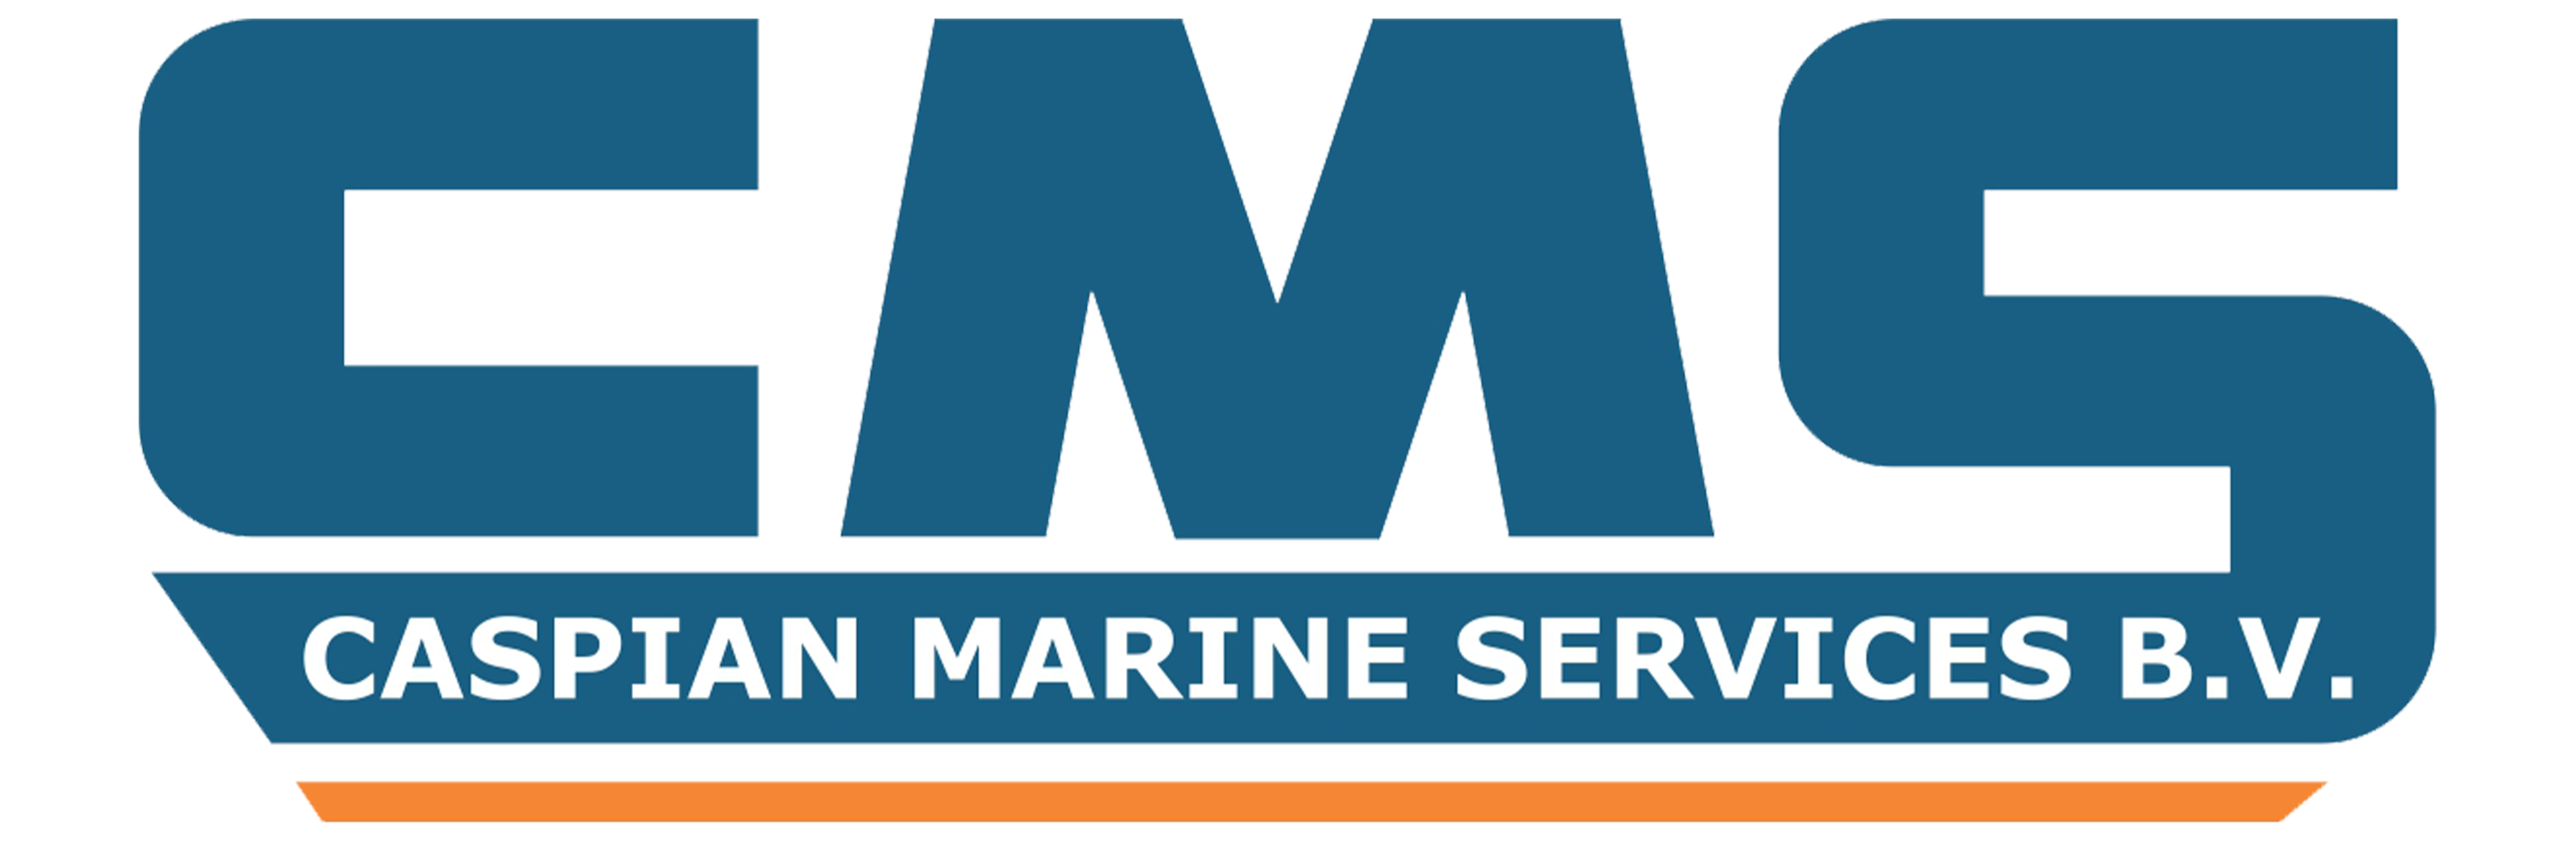 Marine service. Caspian Marine services. Caspian integrated services логотип. Caspian Marine services b.v.. Caspian Marine Marine.